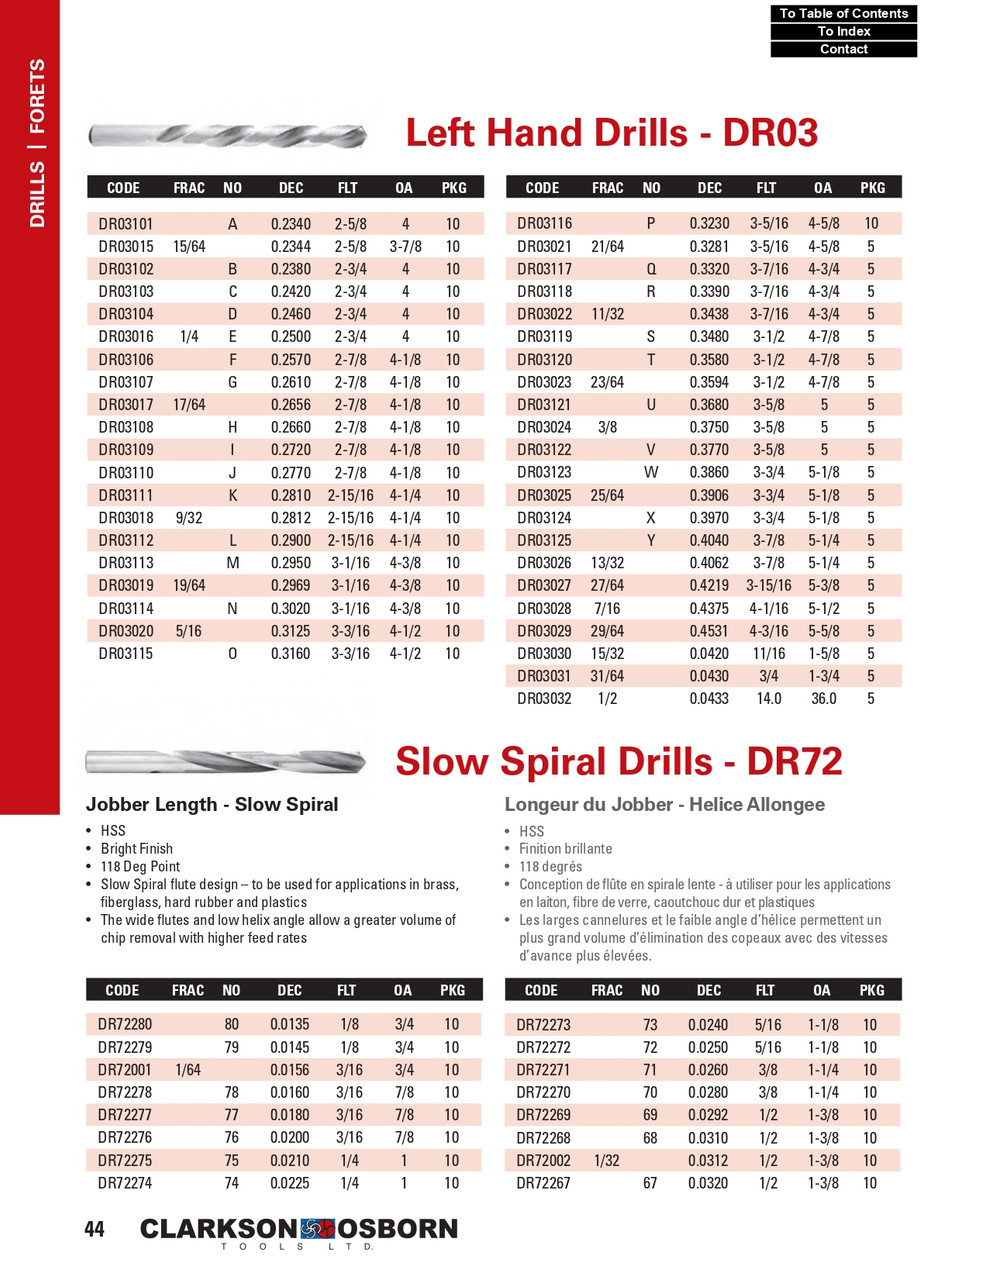 "B" Bright Finish Slow Spiral Jobber Drill Bit   DR72102